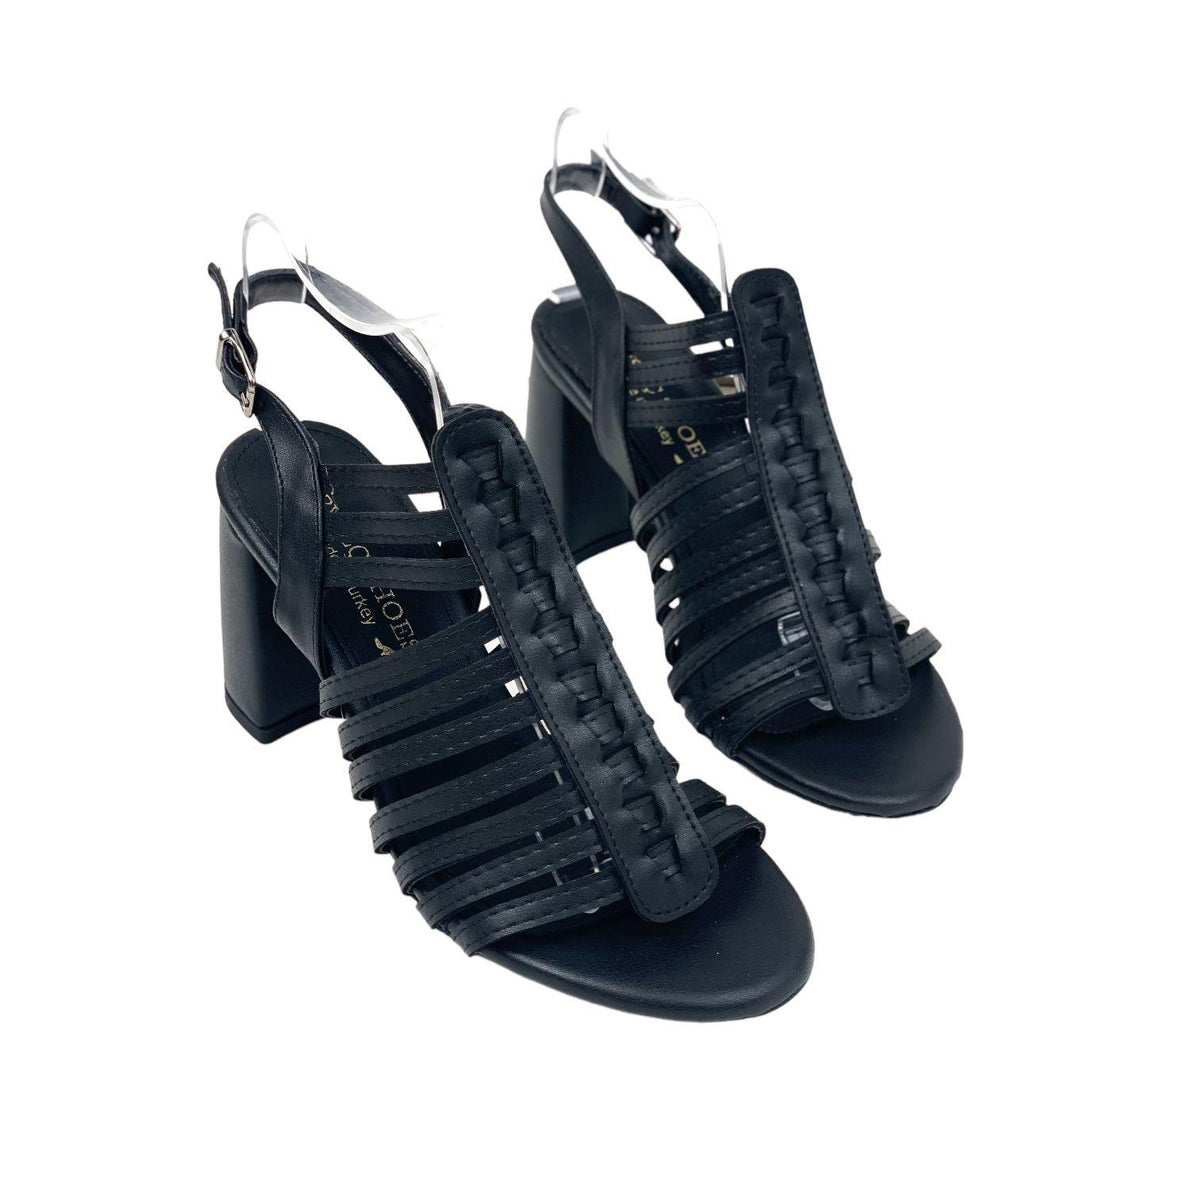 Women's Pert Black Skin Thick High Heel Shoes Sandals - STREETMODE ™